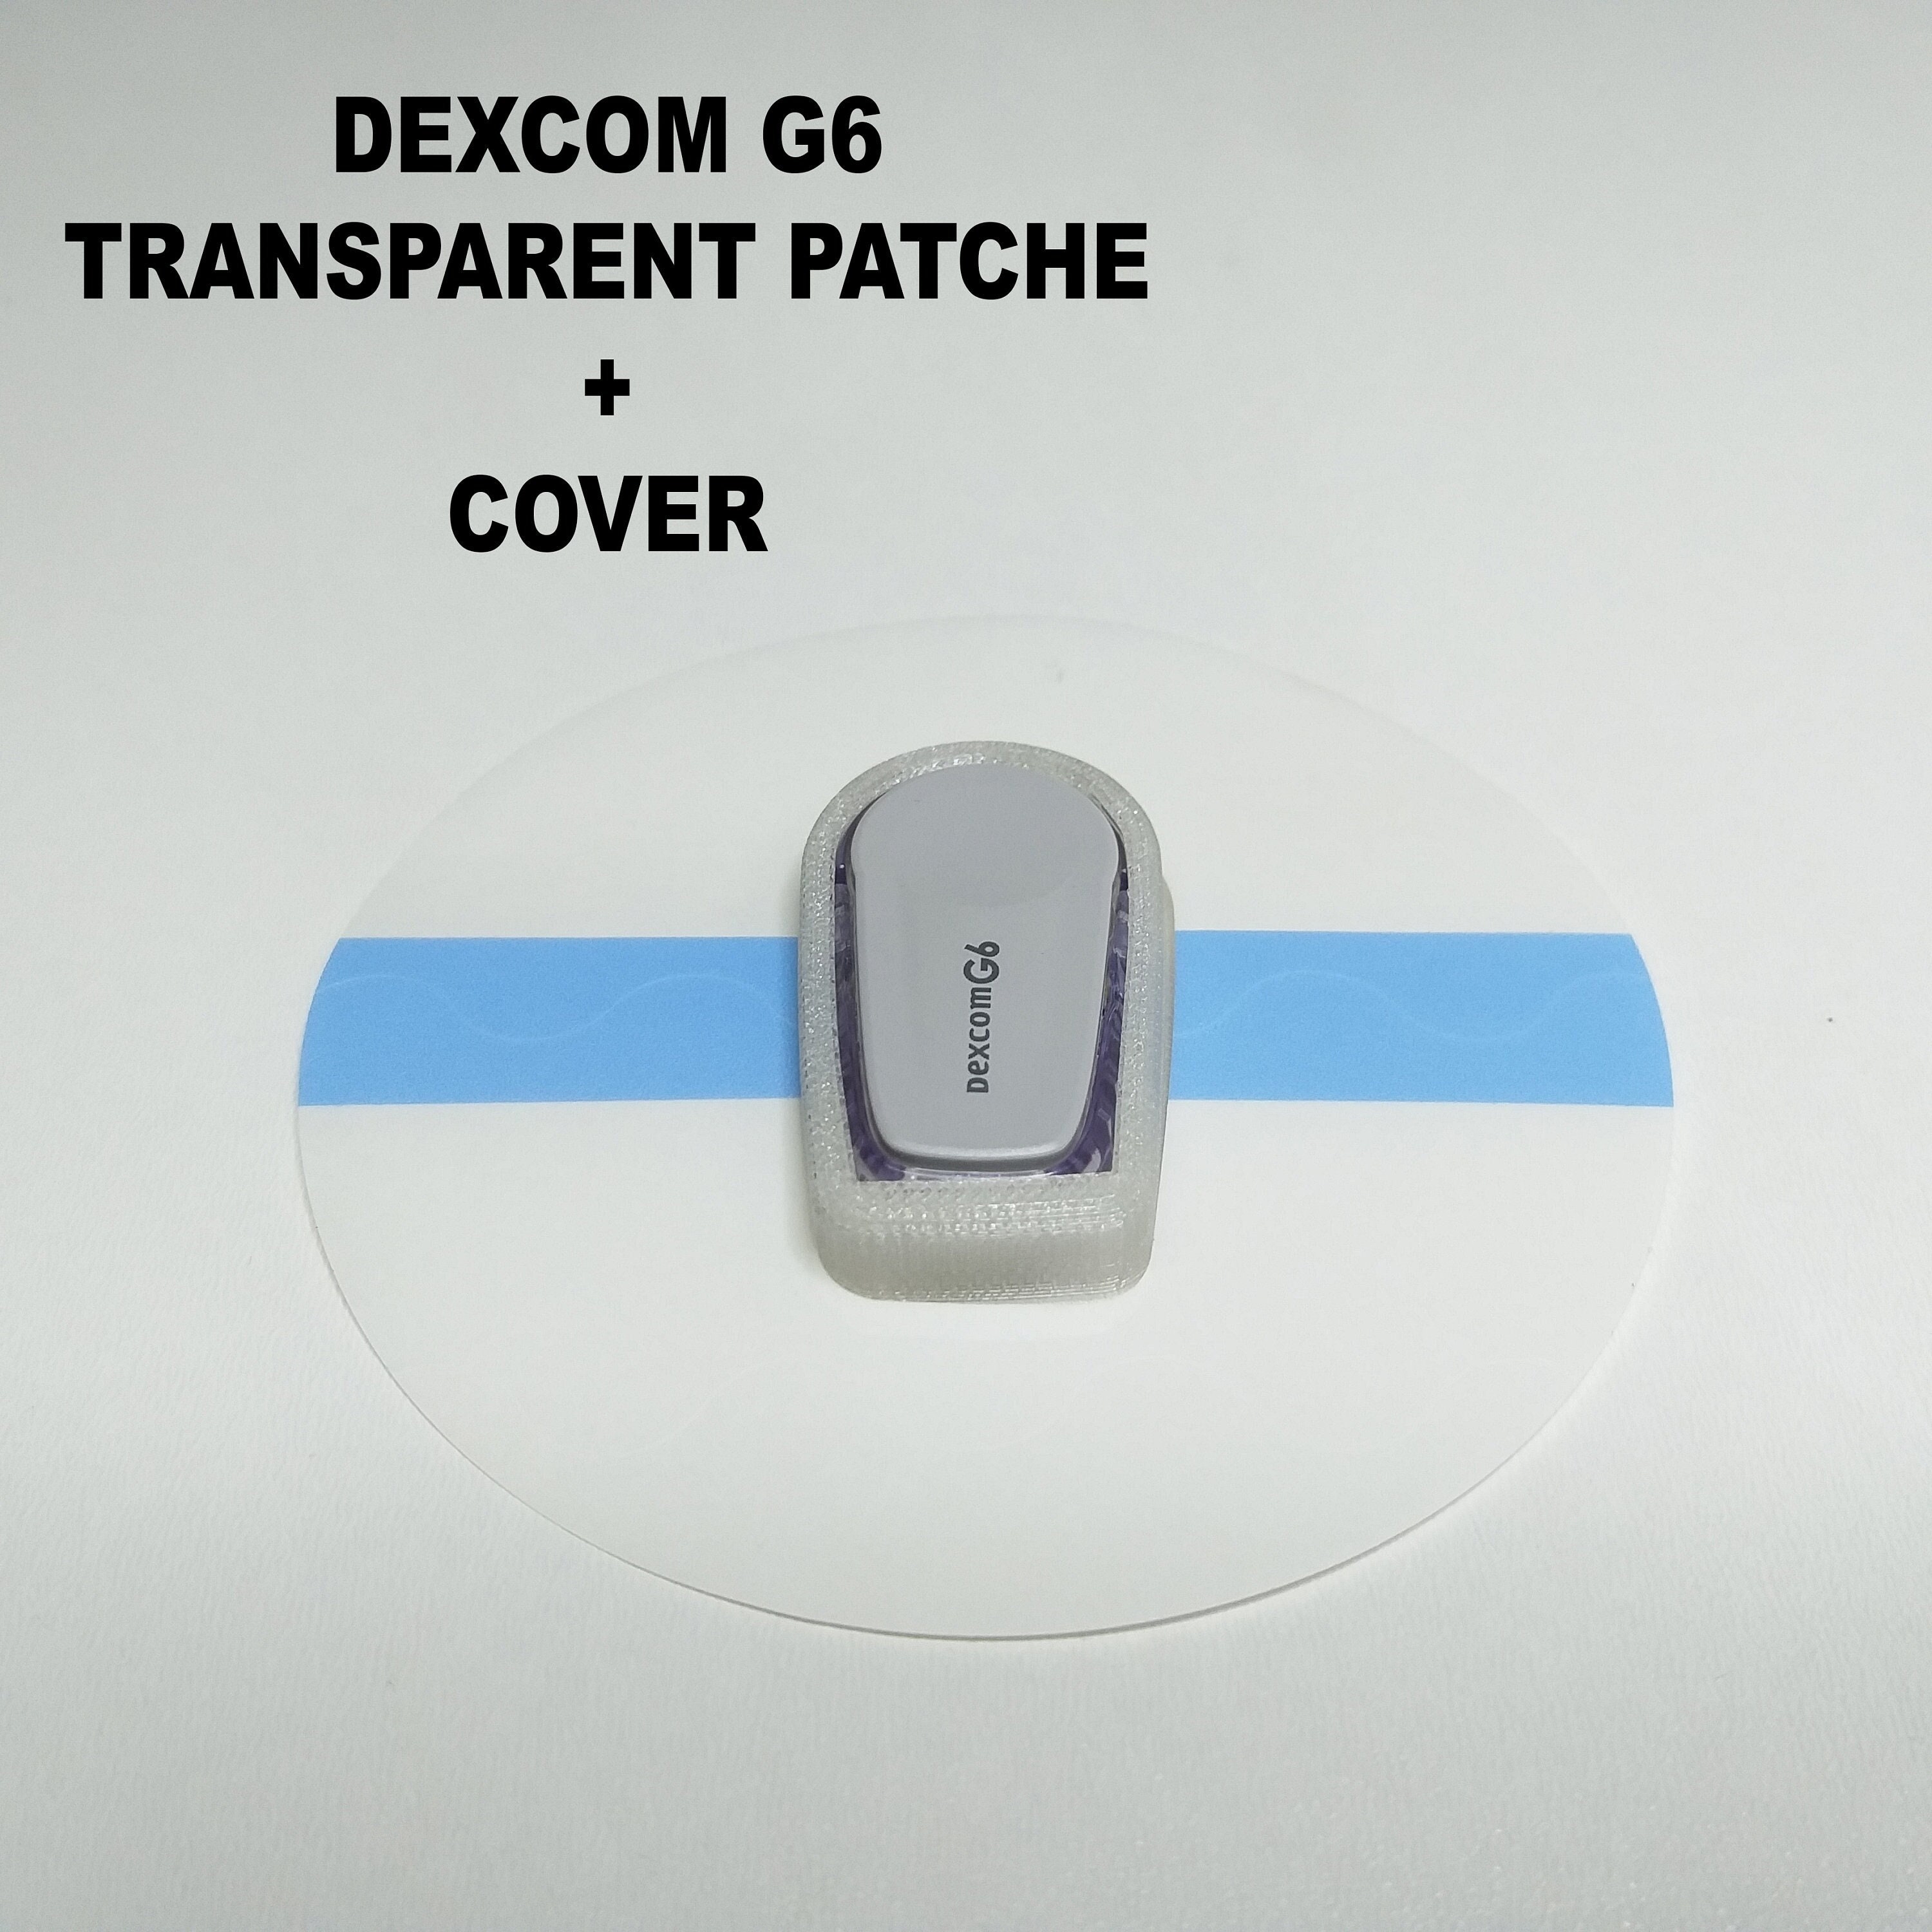 ExpressionMed Galaxy Dexcom G6 Mini Patch